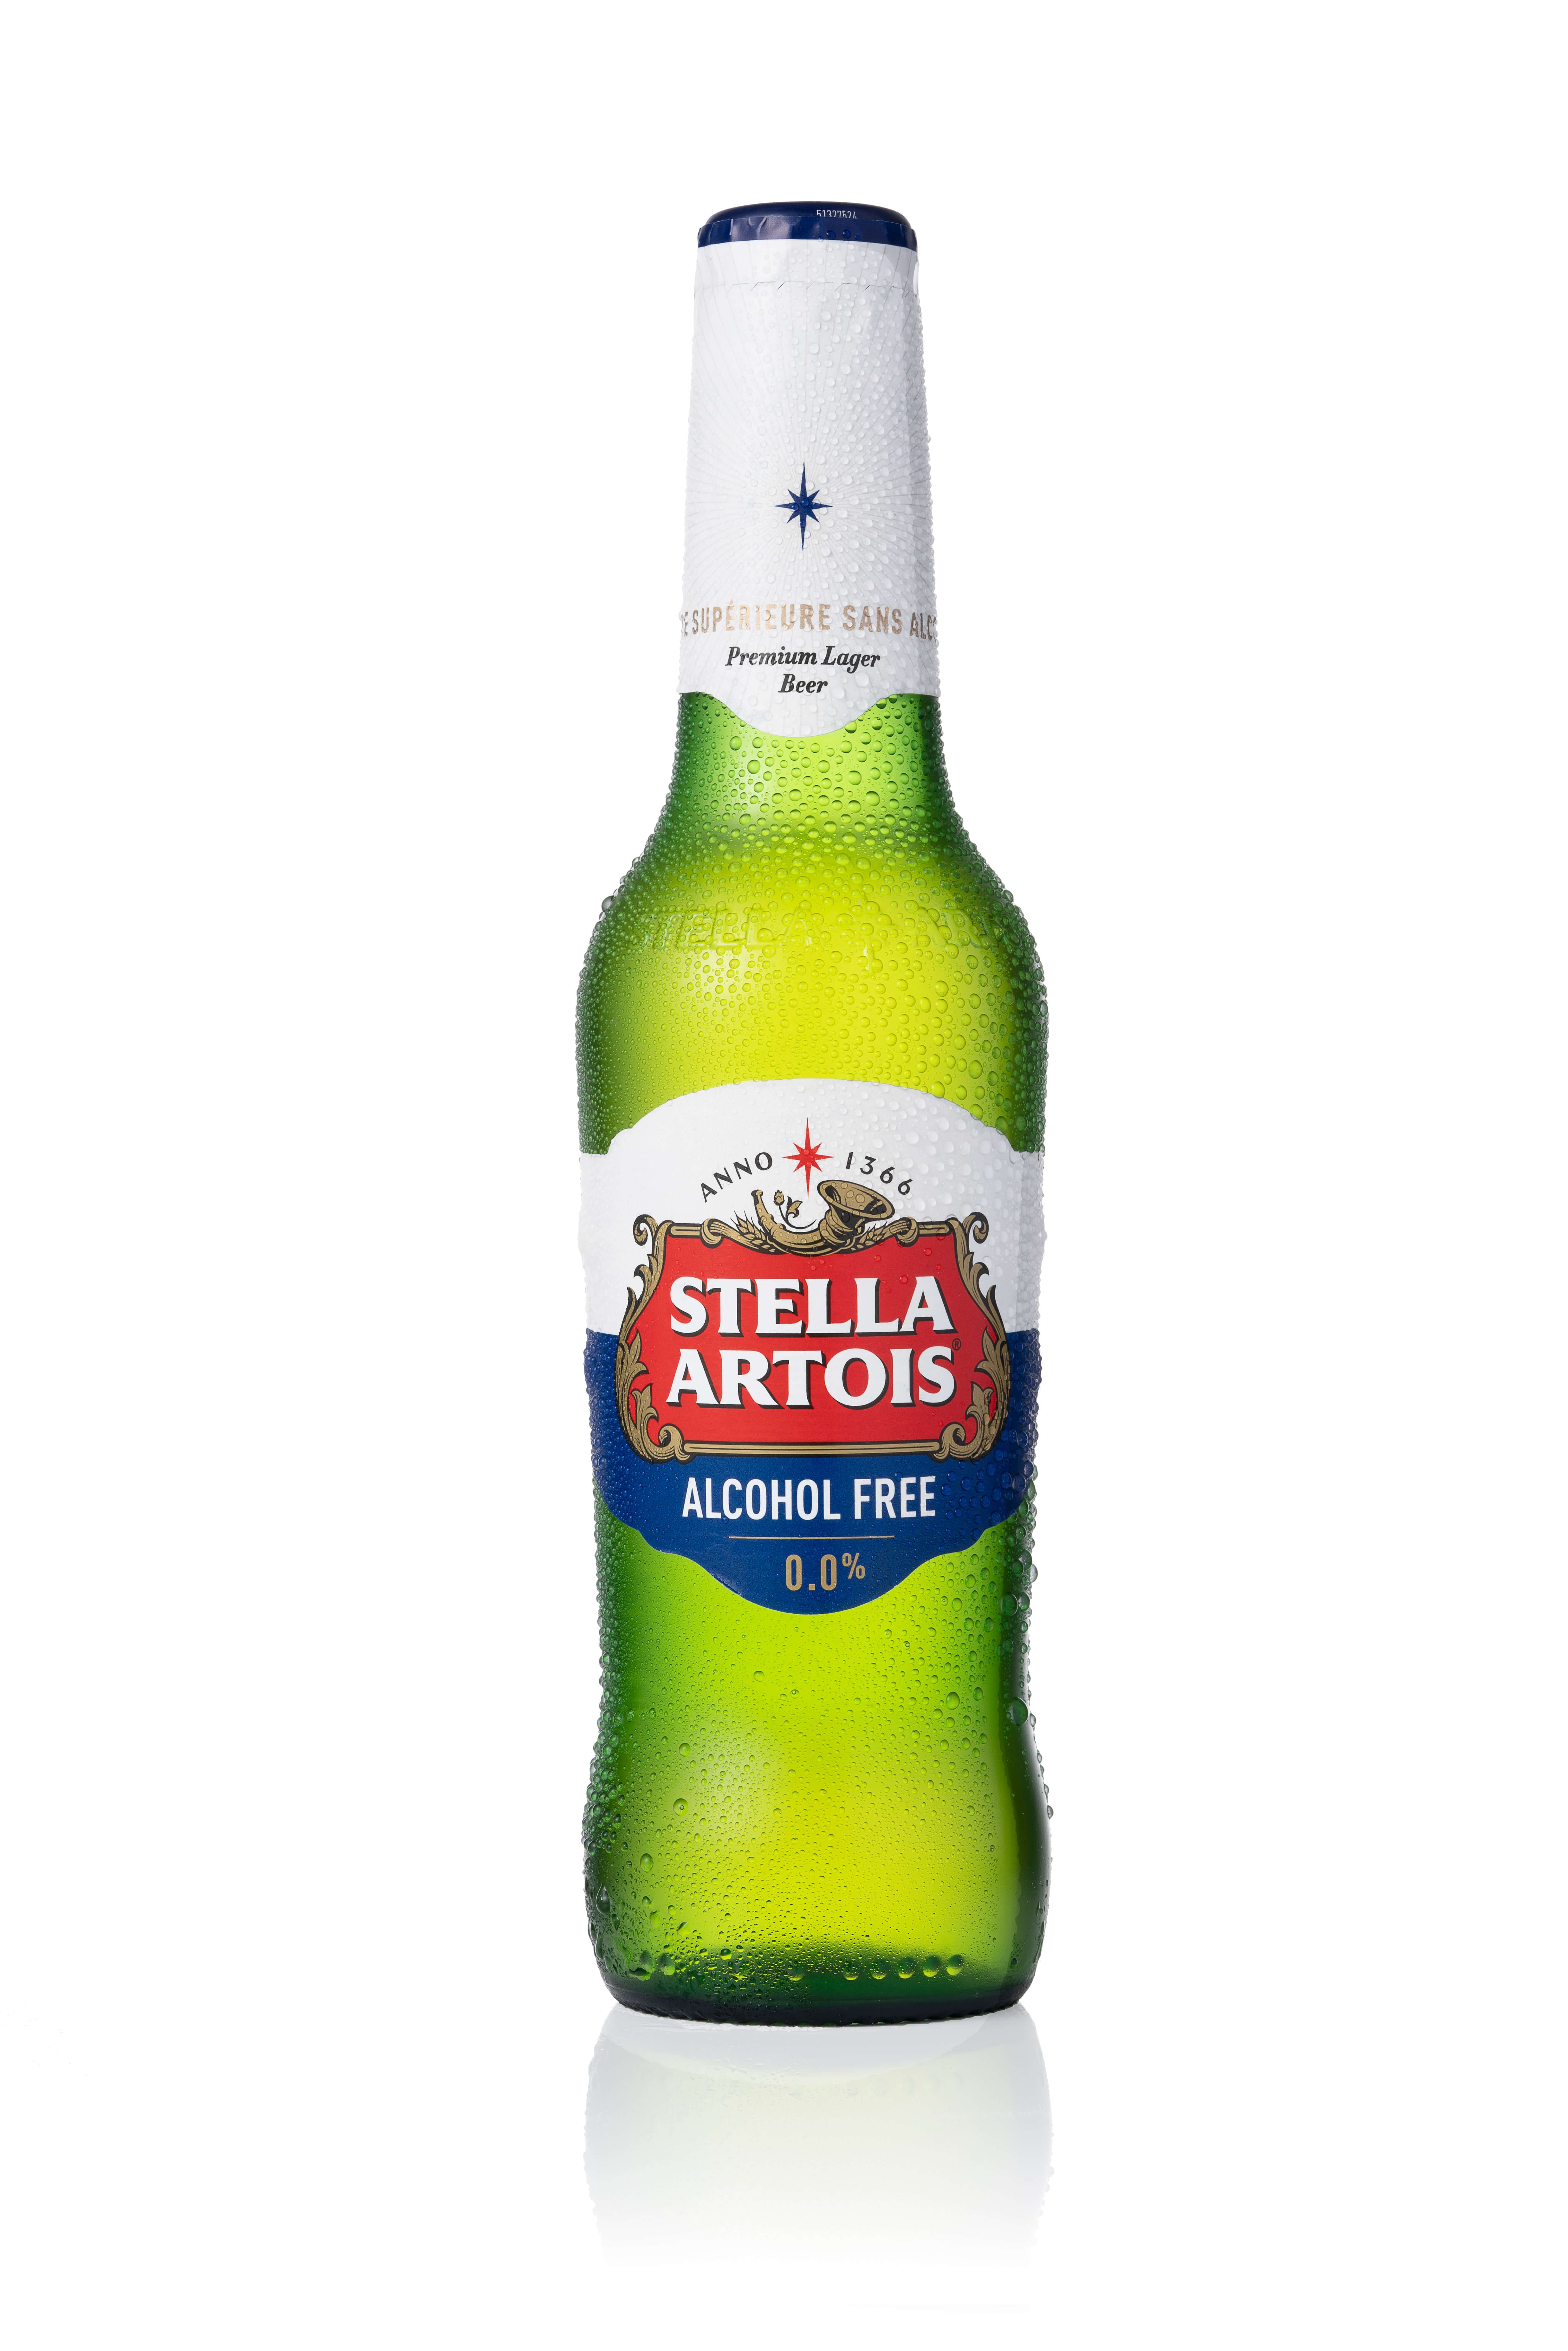 Stella Artois Alcohol Free bottle